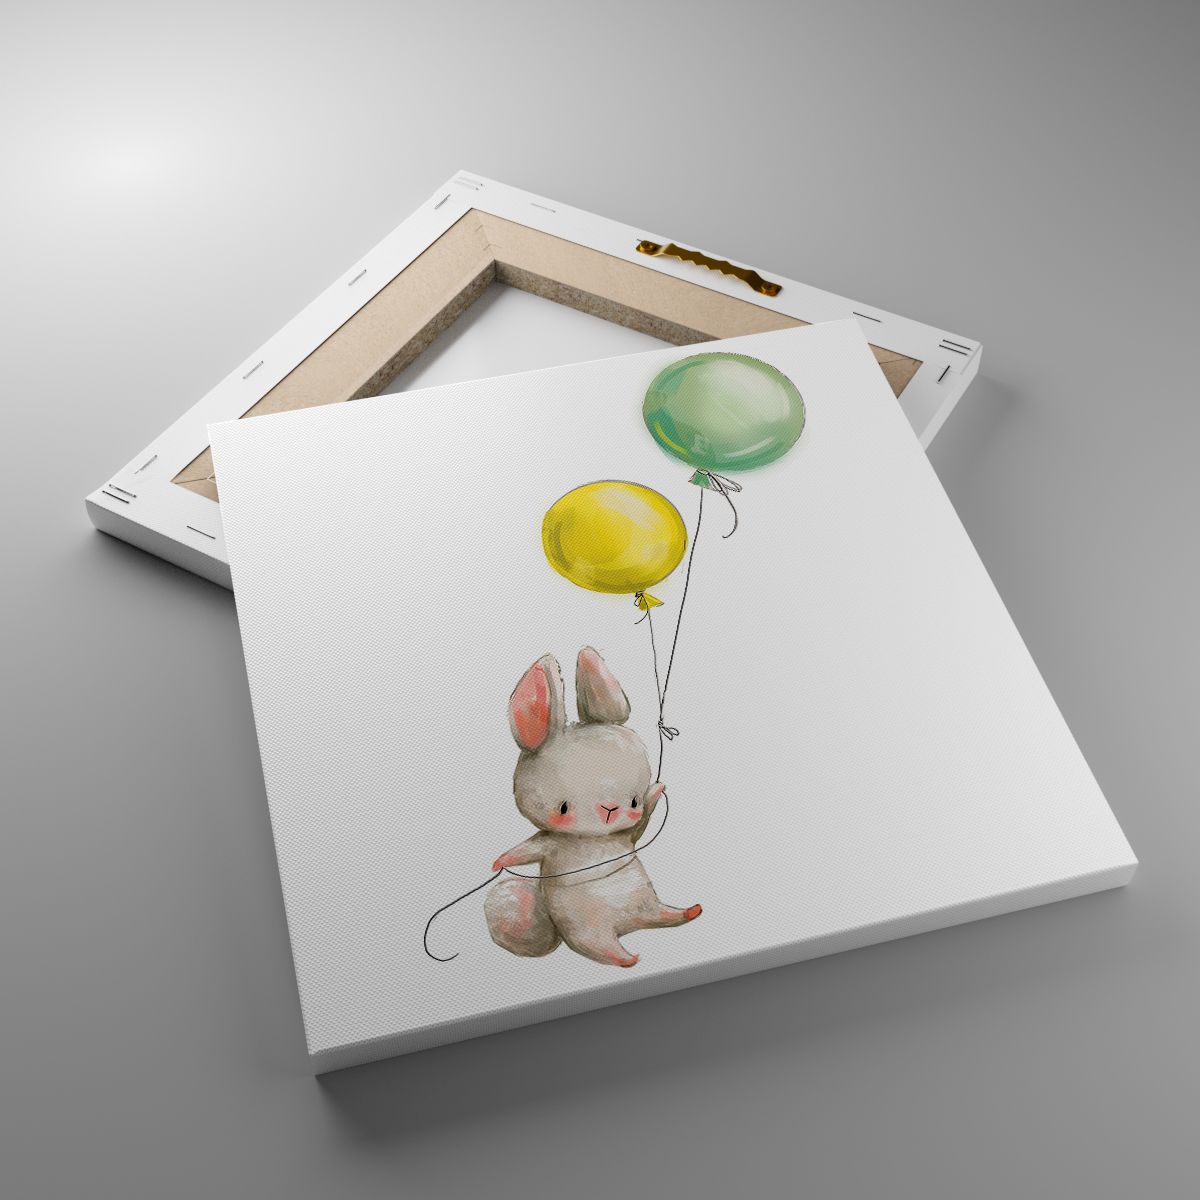 Leinwandbild Für Kinder, Leinwandbild Kaninchen, Leinwandbild Bunte Luftballons, Leinwandbild Freundschaft, Leinwandbild Liebe